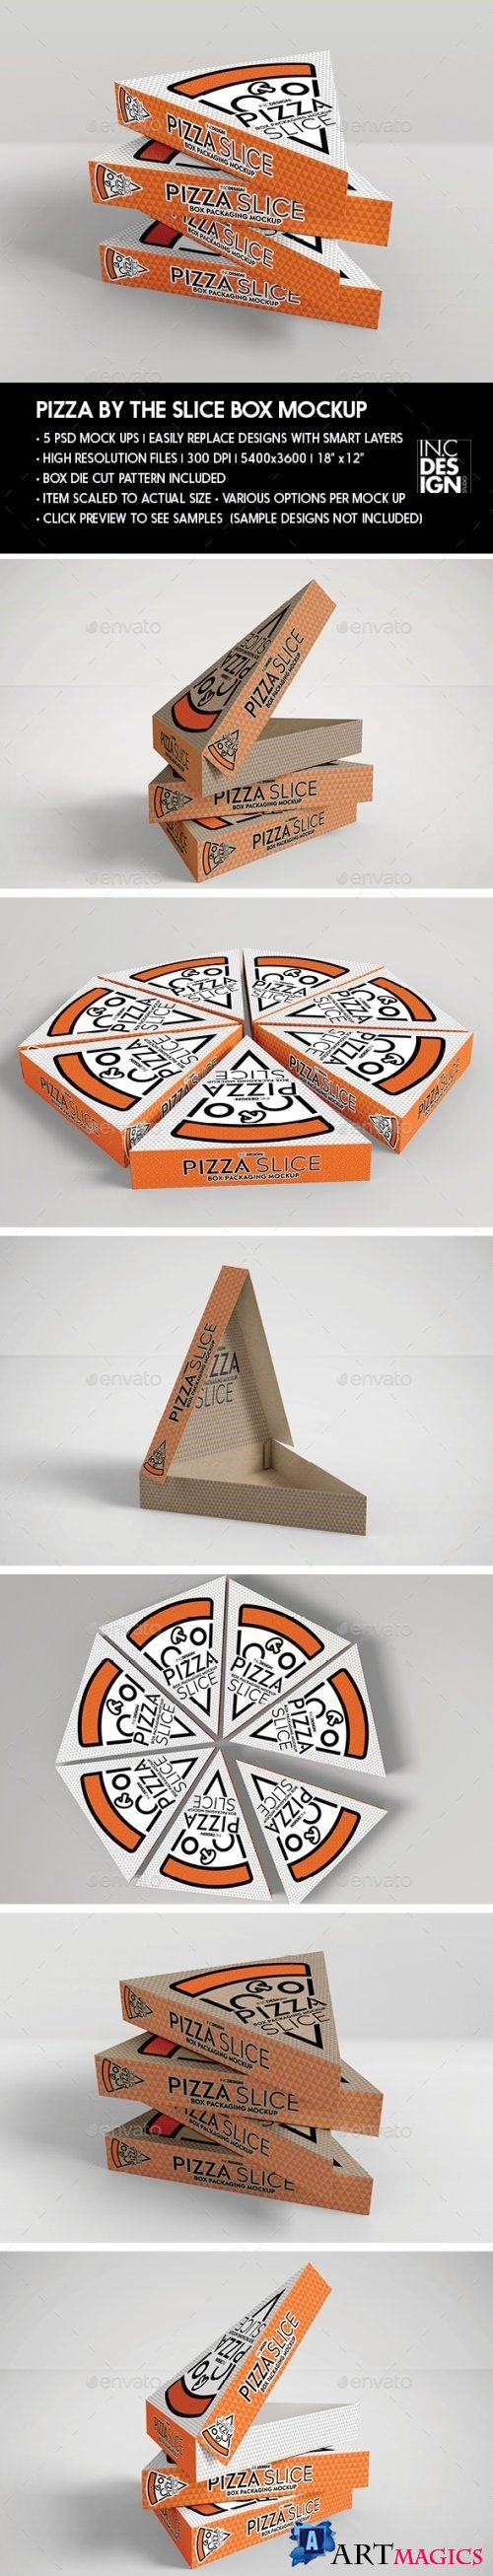 Packaging Mockup Pizza Slice Box 15098886